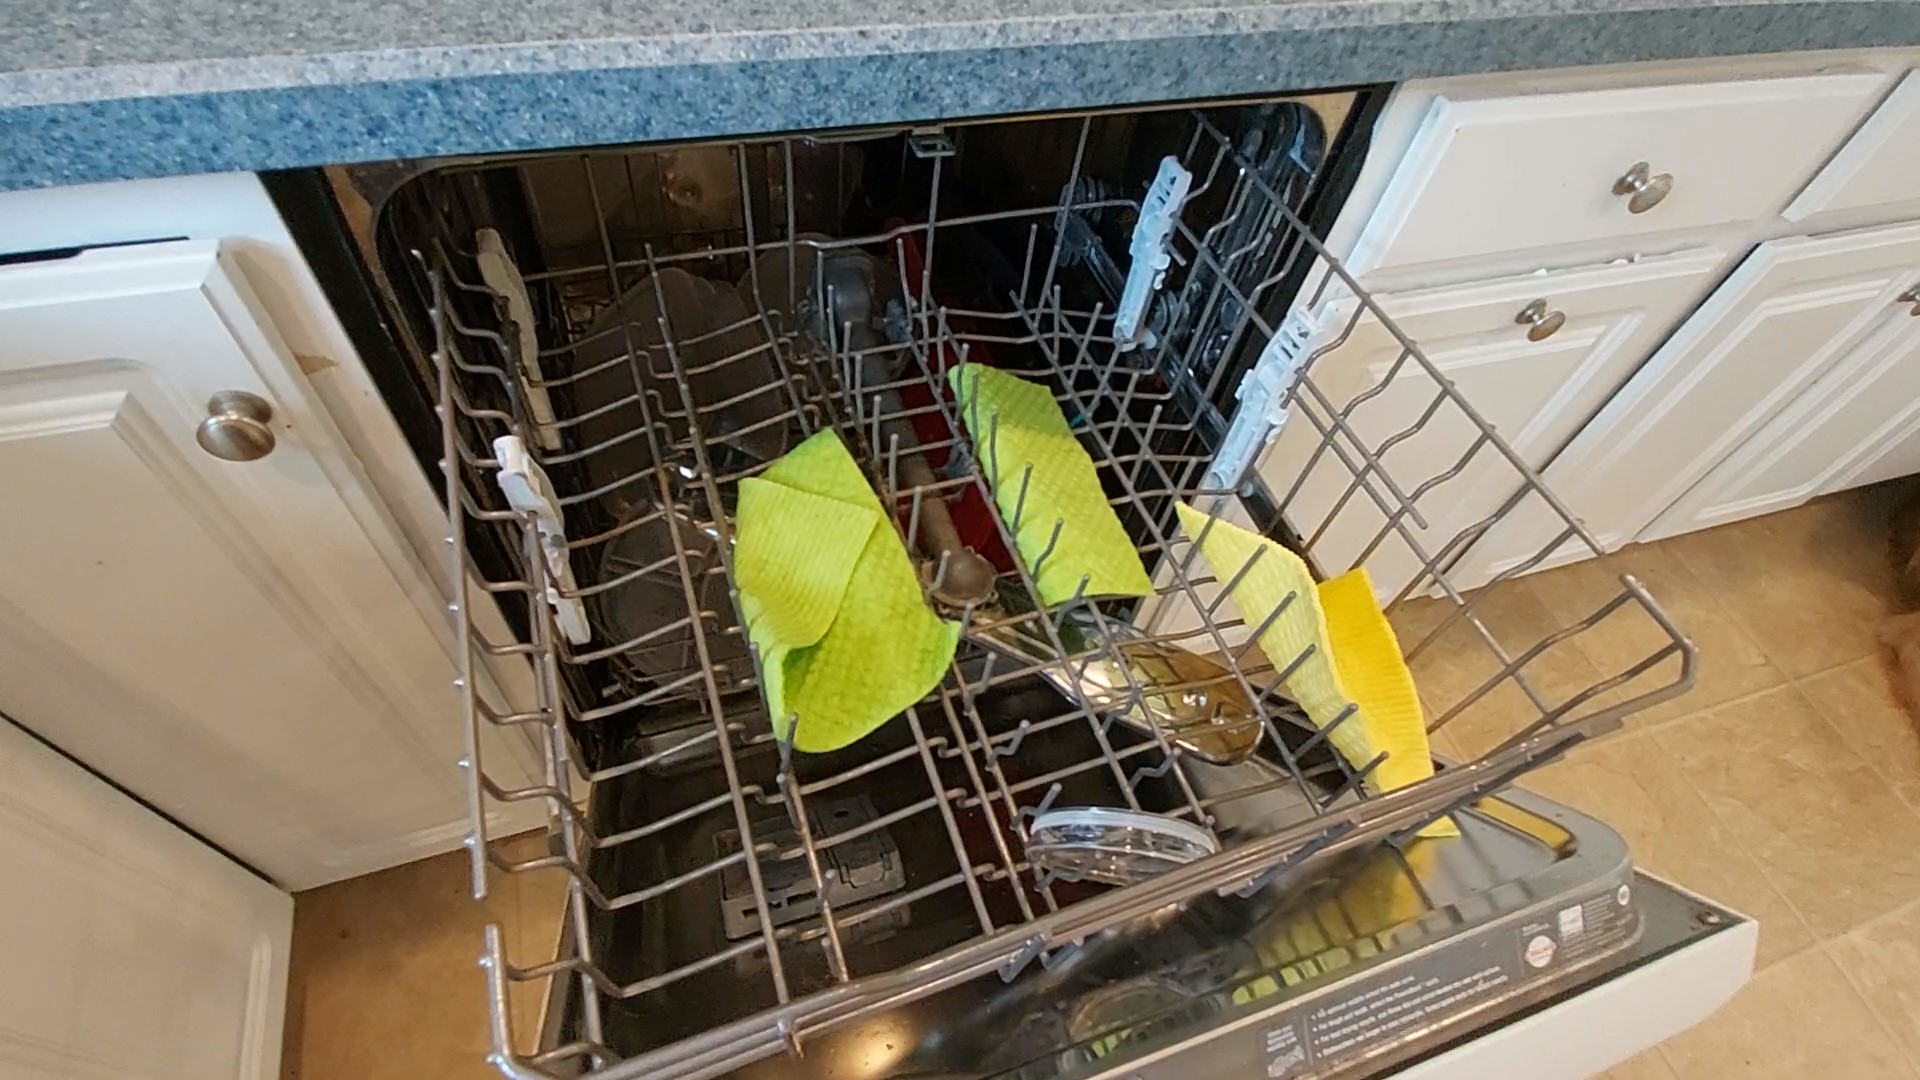 Instant Erase Swedish Dishcloths Reusable Kitchen Clothes 12 Pack